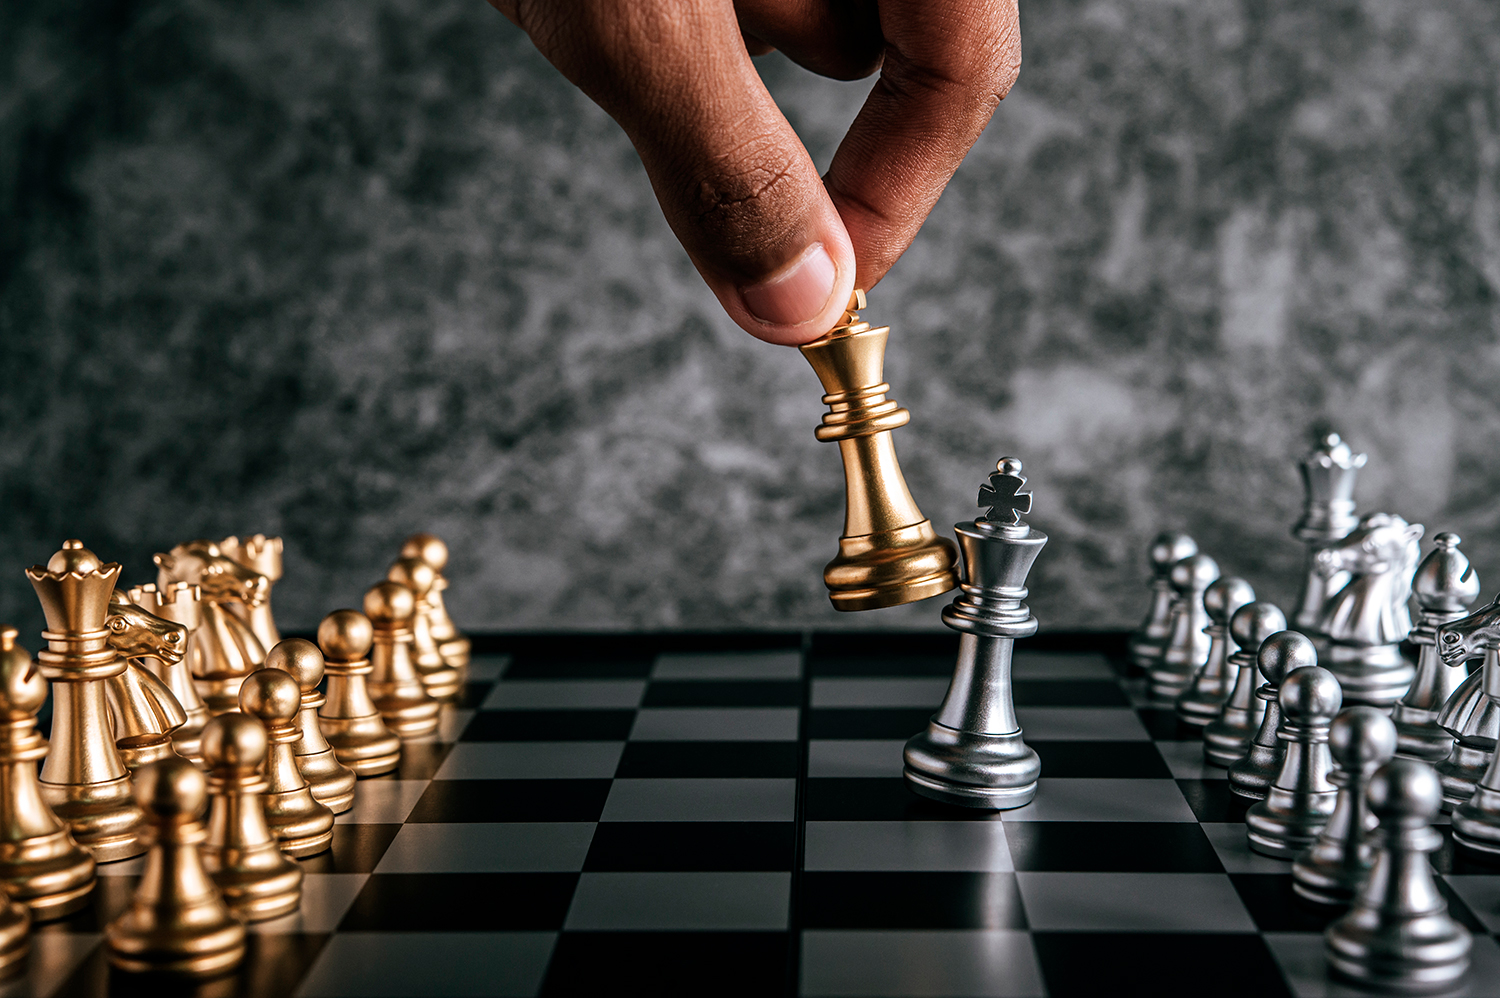 https://merradisgroup.com/wp-content/uploads/2021/12/hand-man-playing-chess-business-planning-comparison-metaphor-selective-focus.jpg